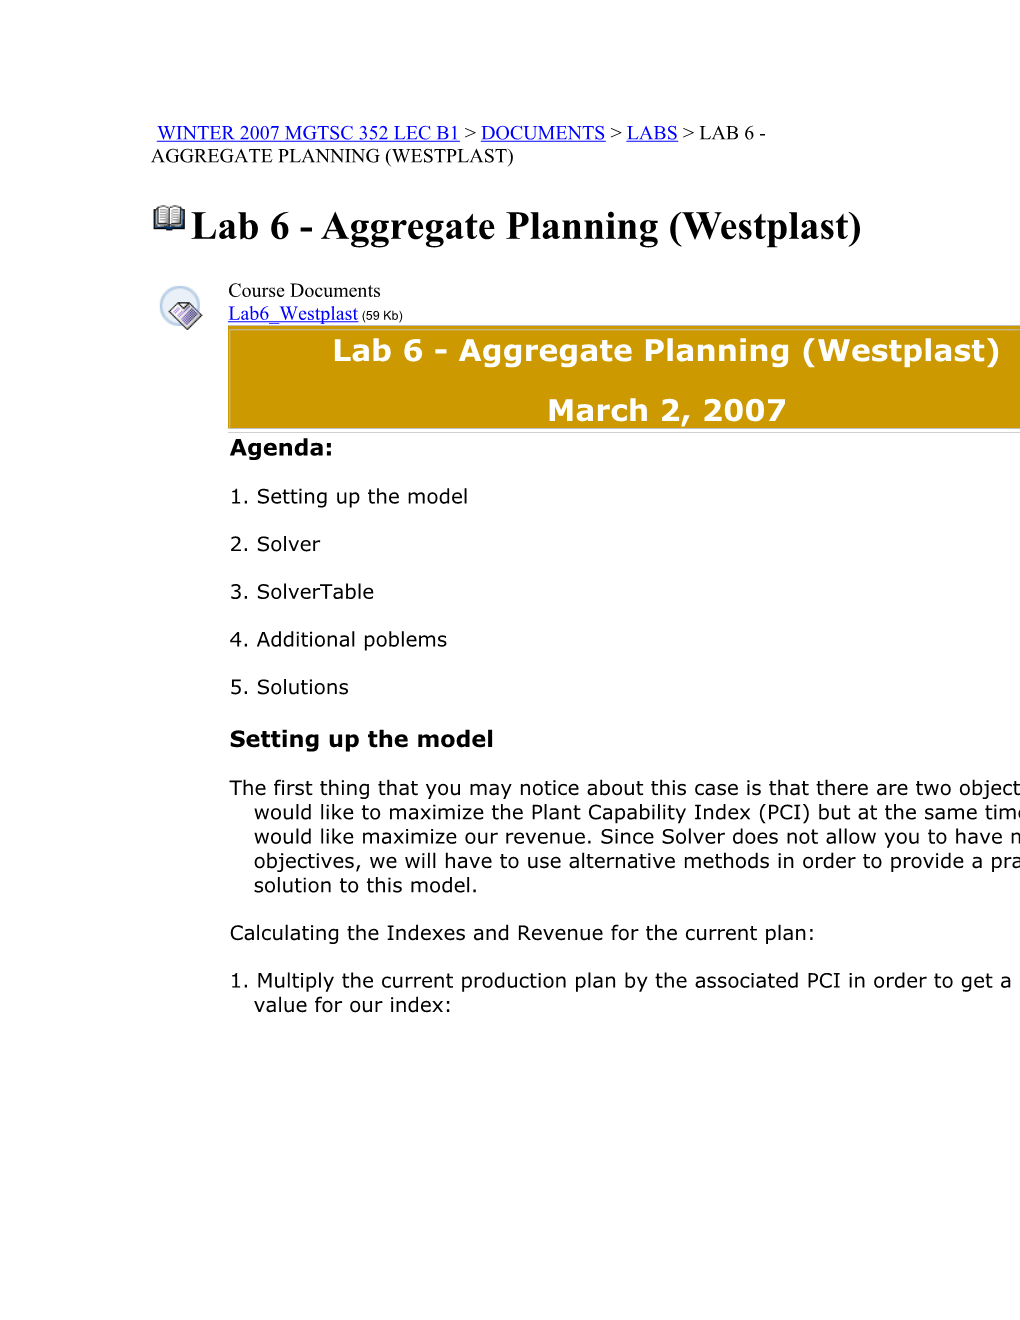 Lab 6 - Aggregate Planning (Westplast)